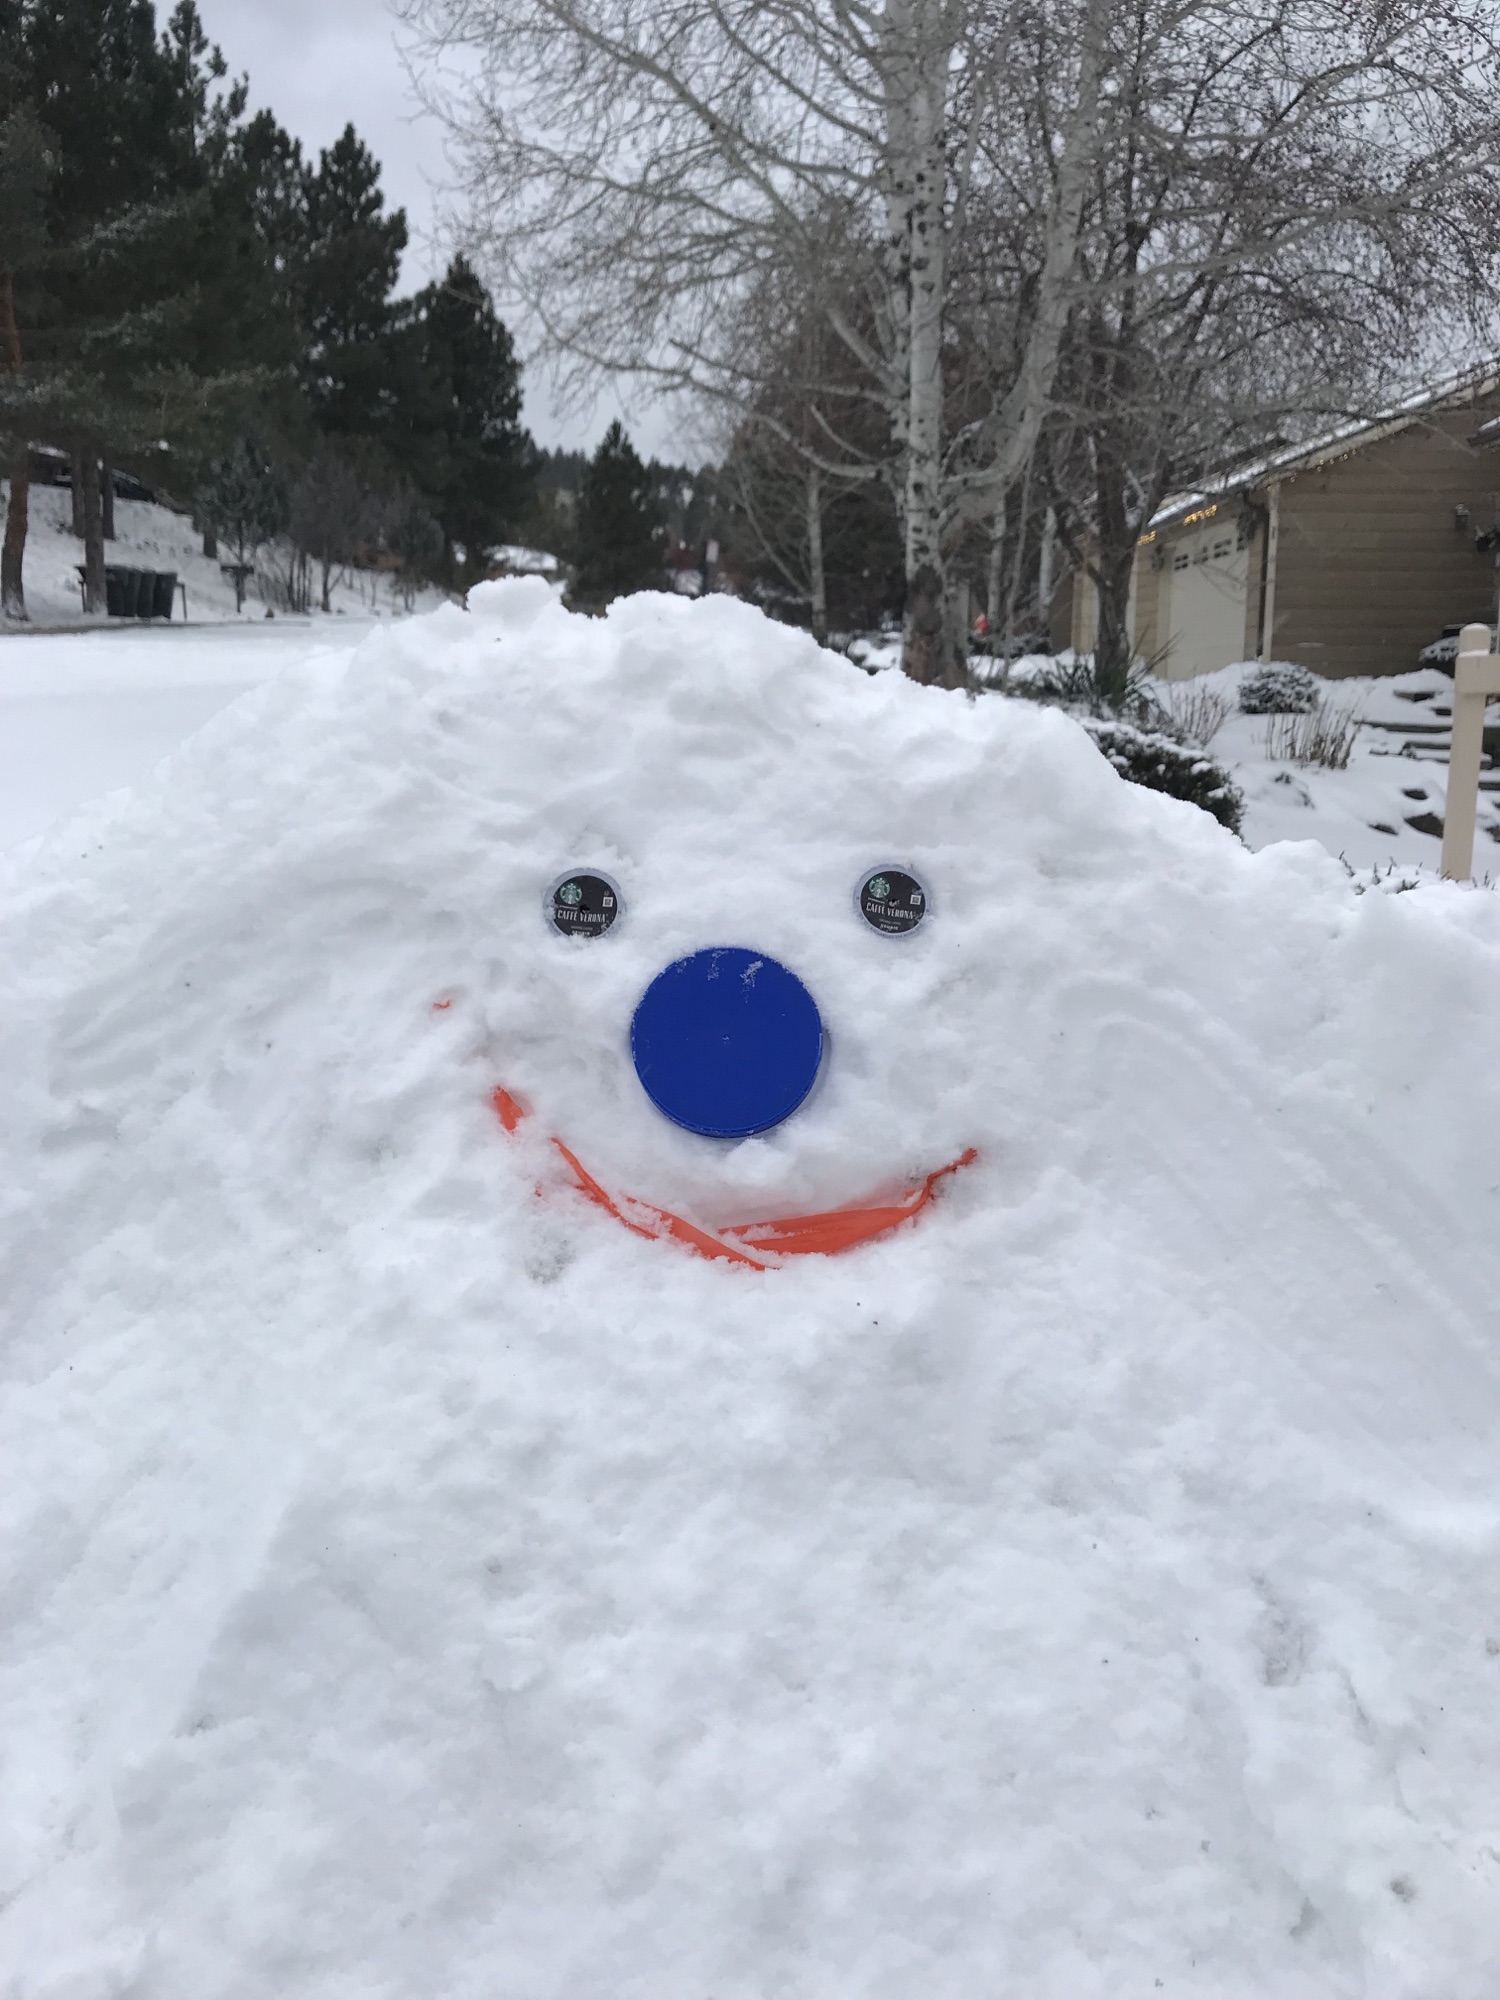 I built a snowman